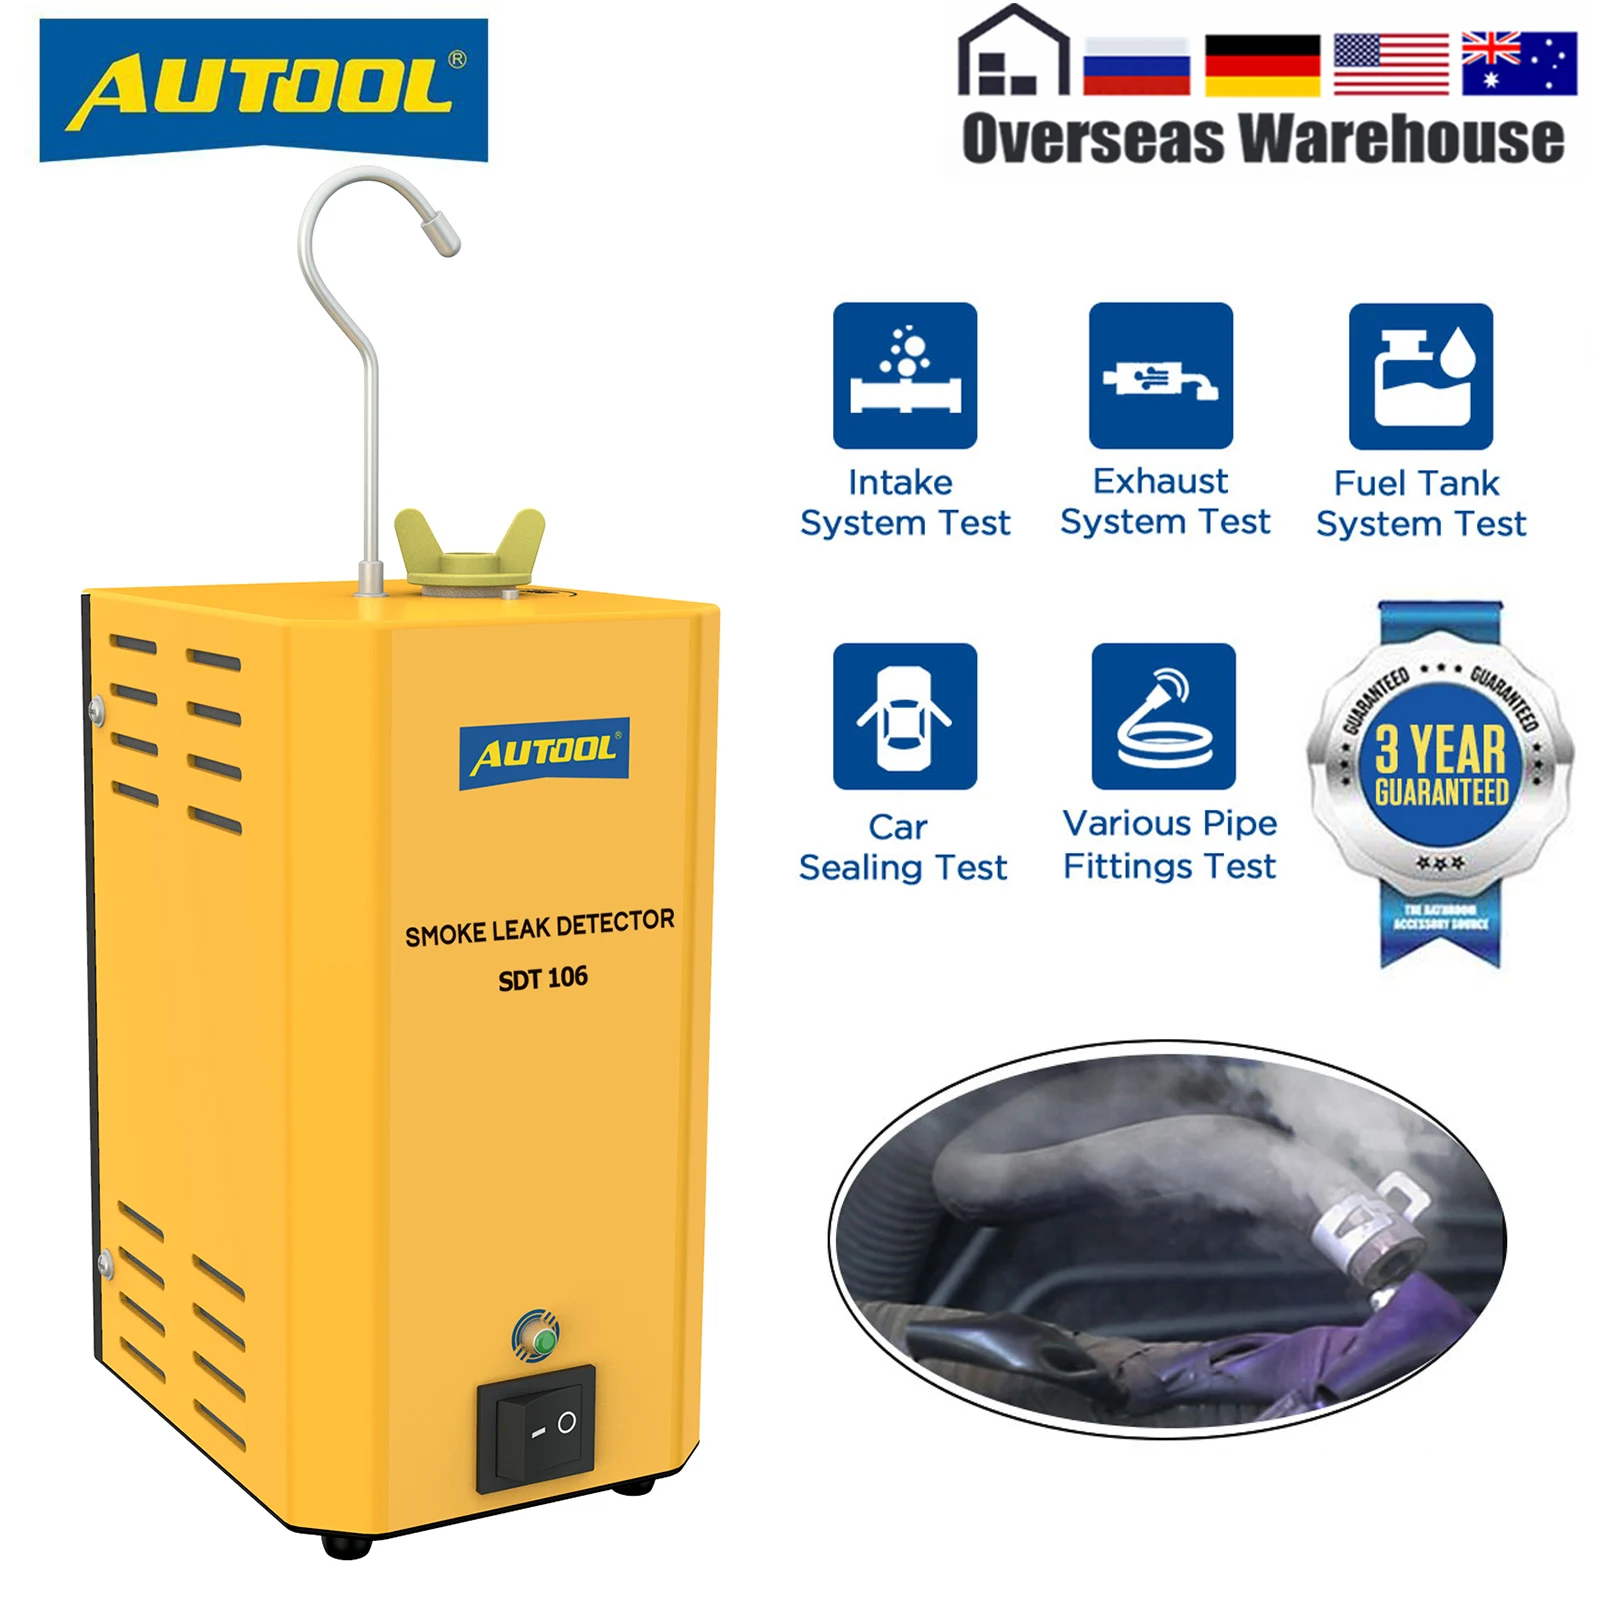 Auto EVAP Fuel Pipe Air Intake System Smoke Leak Detector Tester AUTOOL SDT-106 